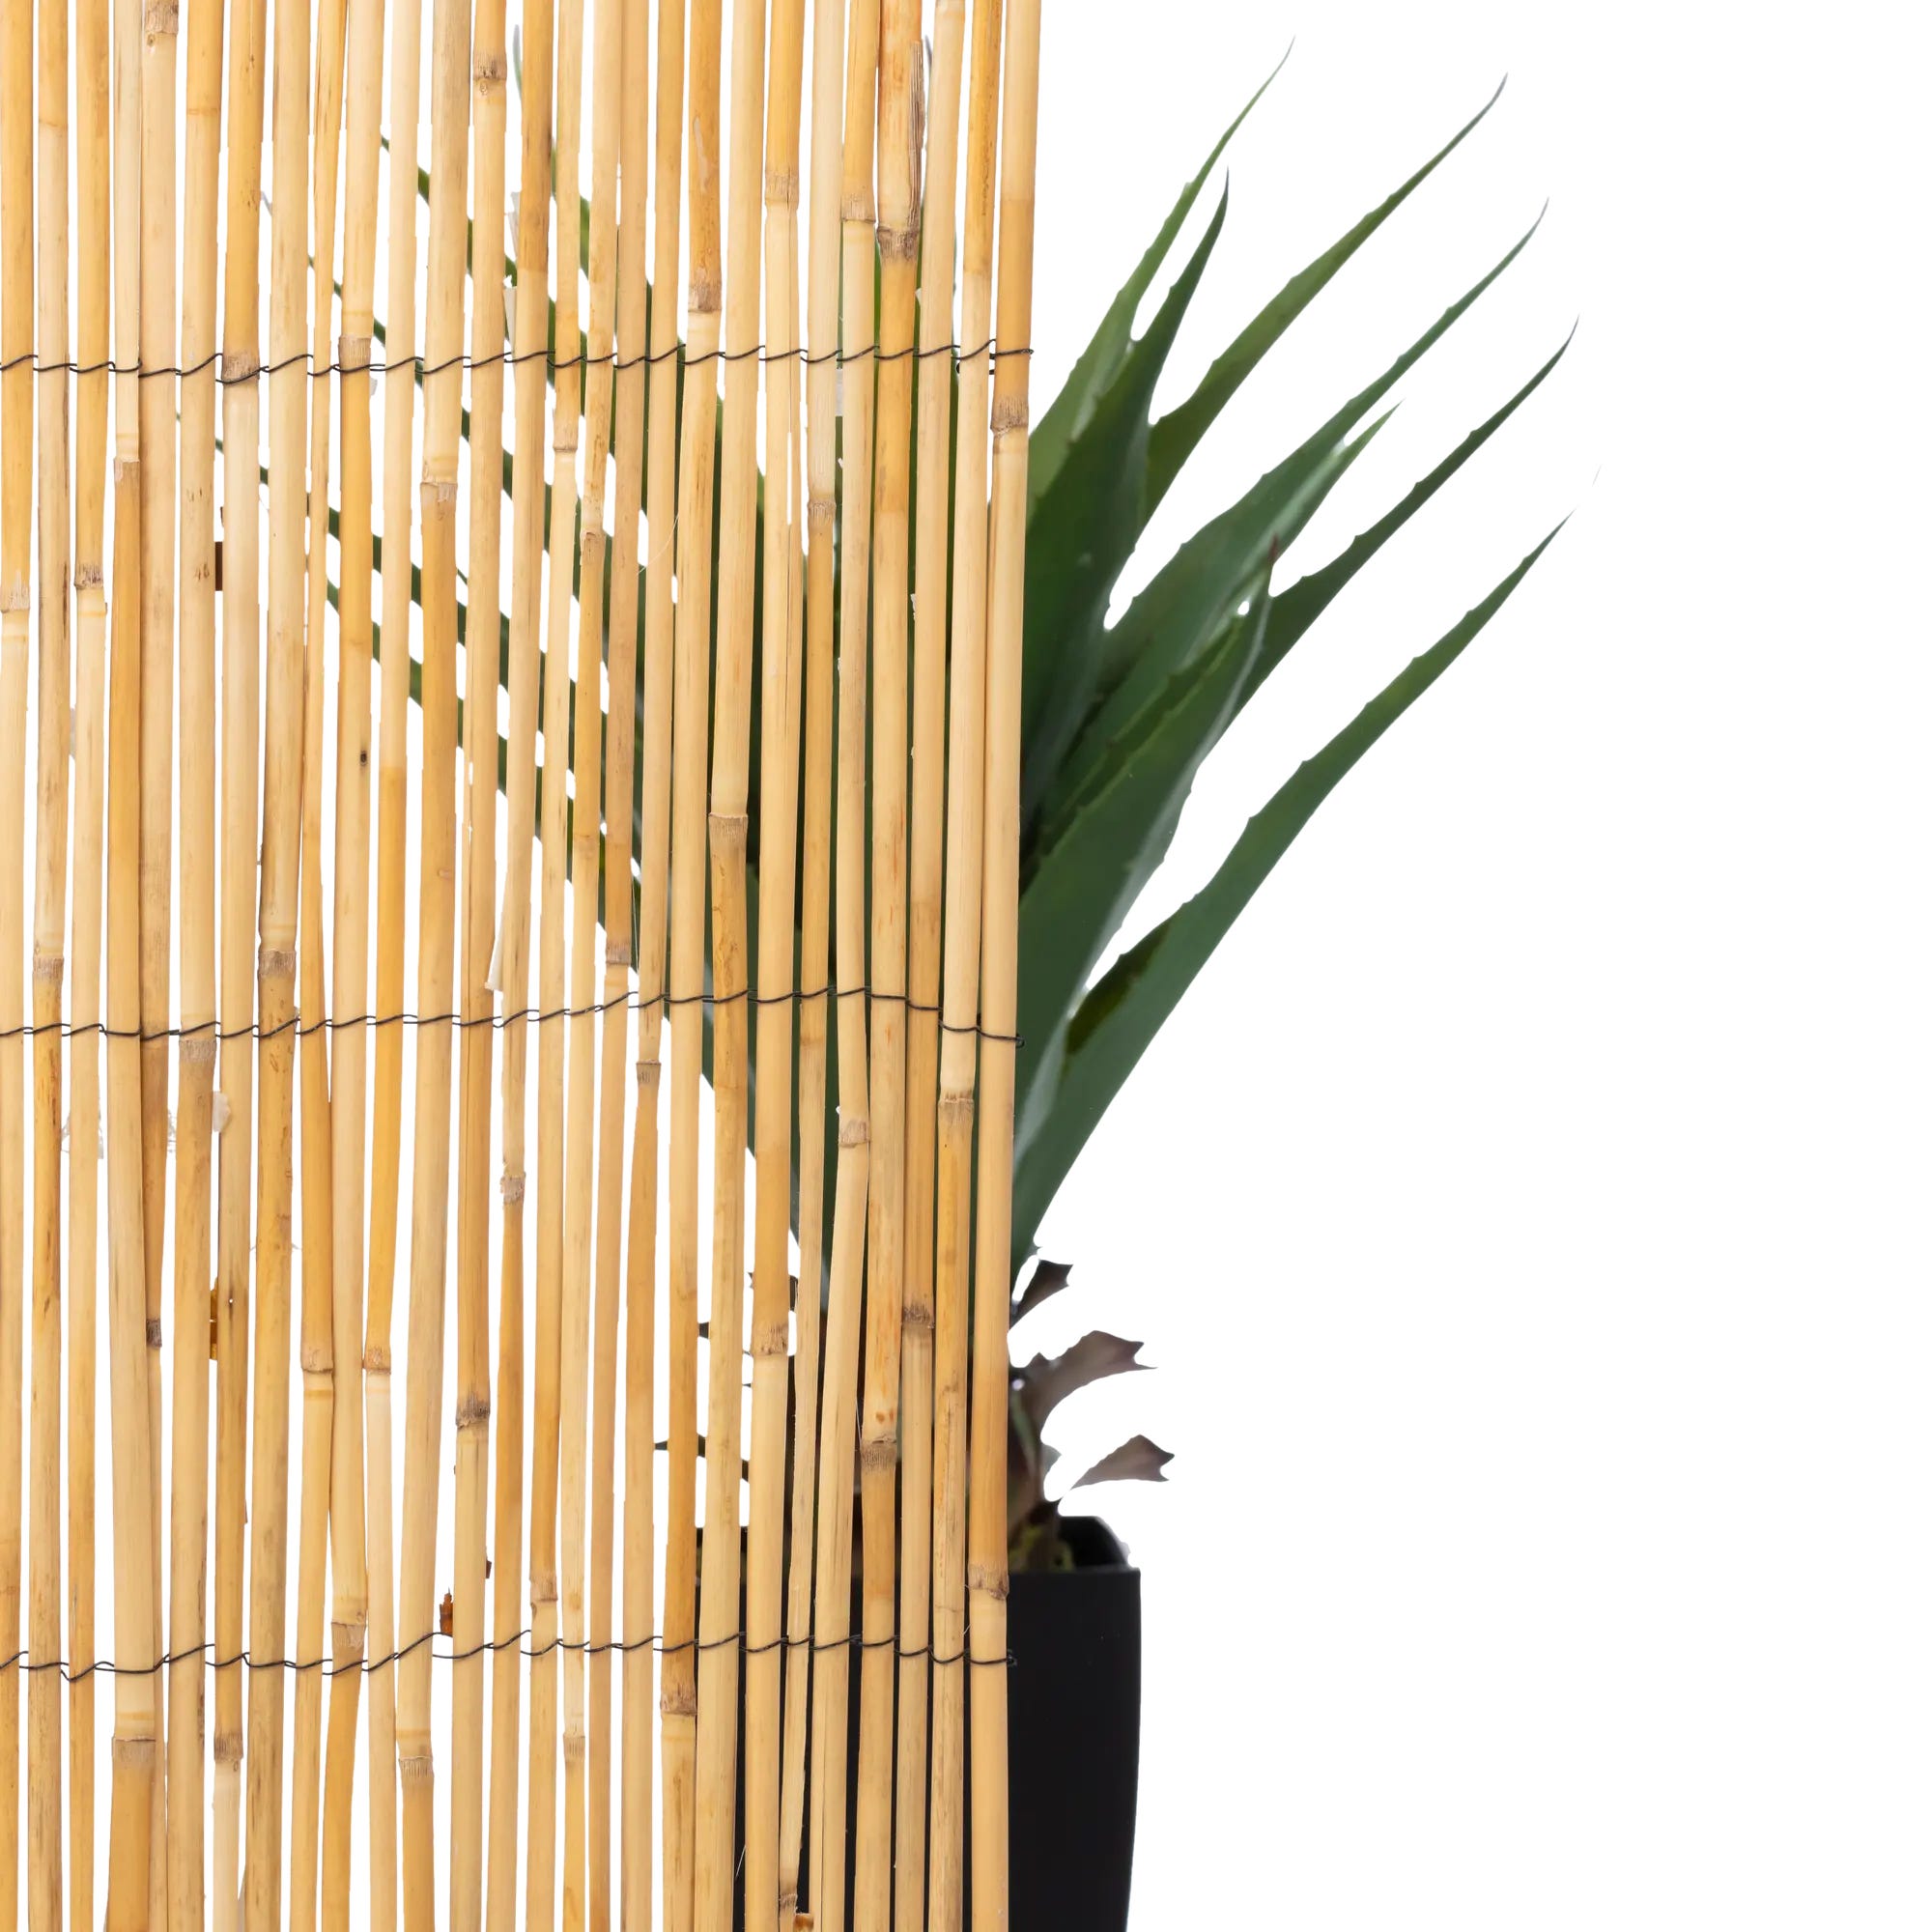 Cañizo bambú fino NATERIAL 2 x 3 m